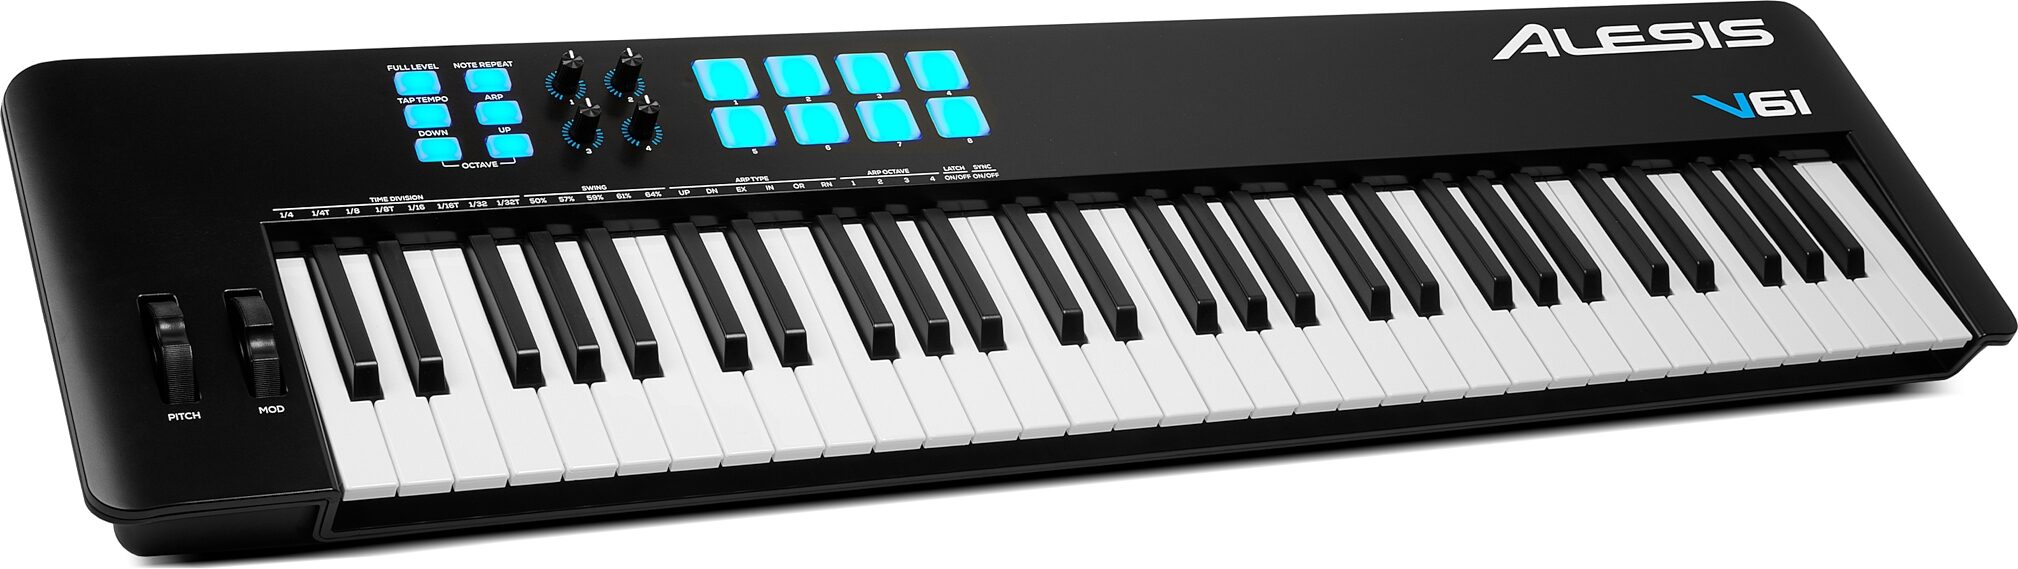 Alesis V61 MKII USB MIDI Keyboard Controller, 61-Key | zZounds